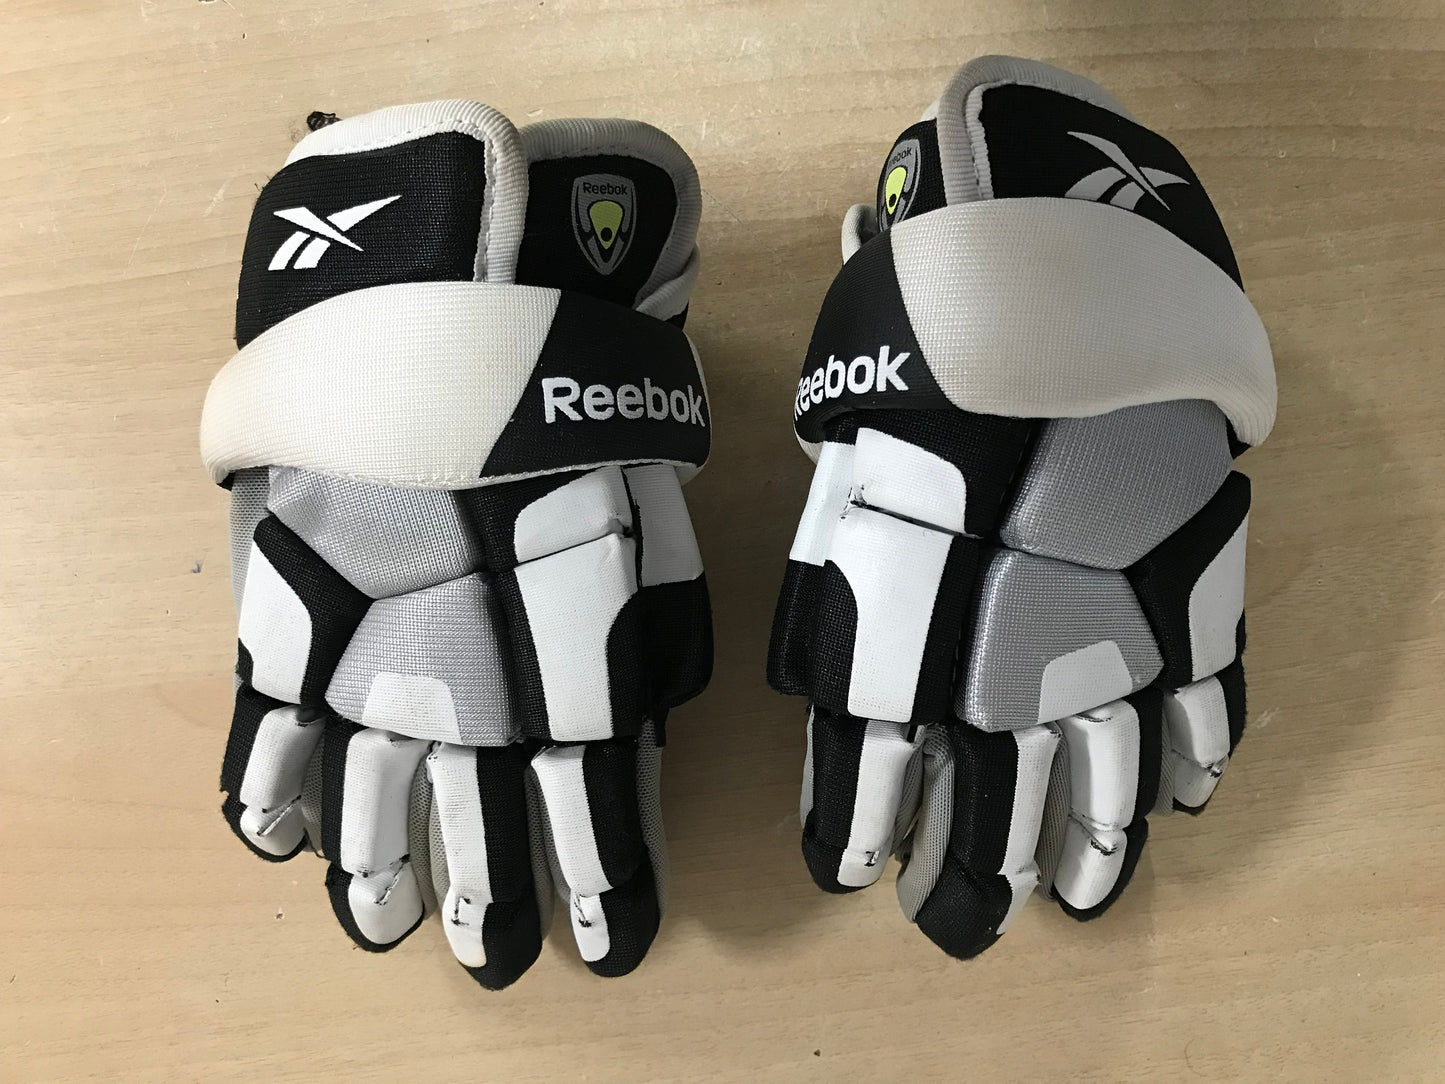 Lacrosse Gloves Child Size 8 inch Age 7-8 Reebok Grey Black White Minor Marks